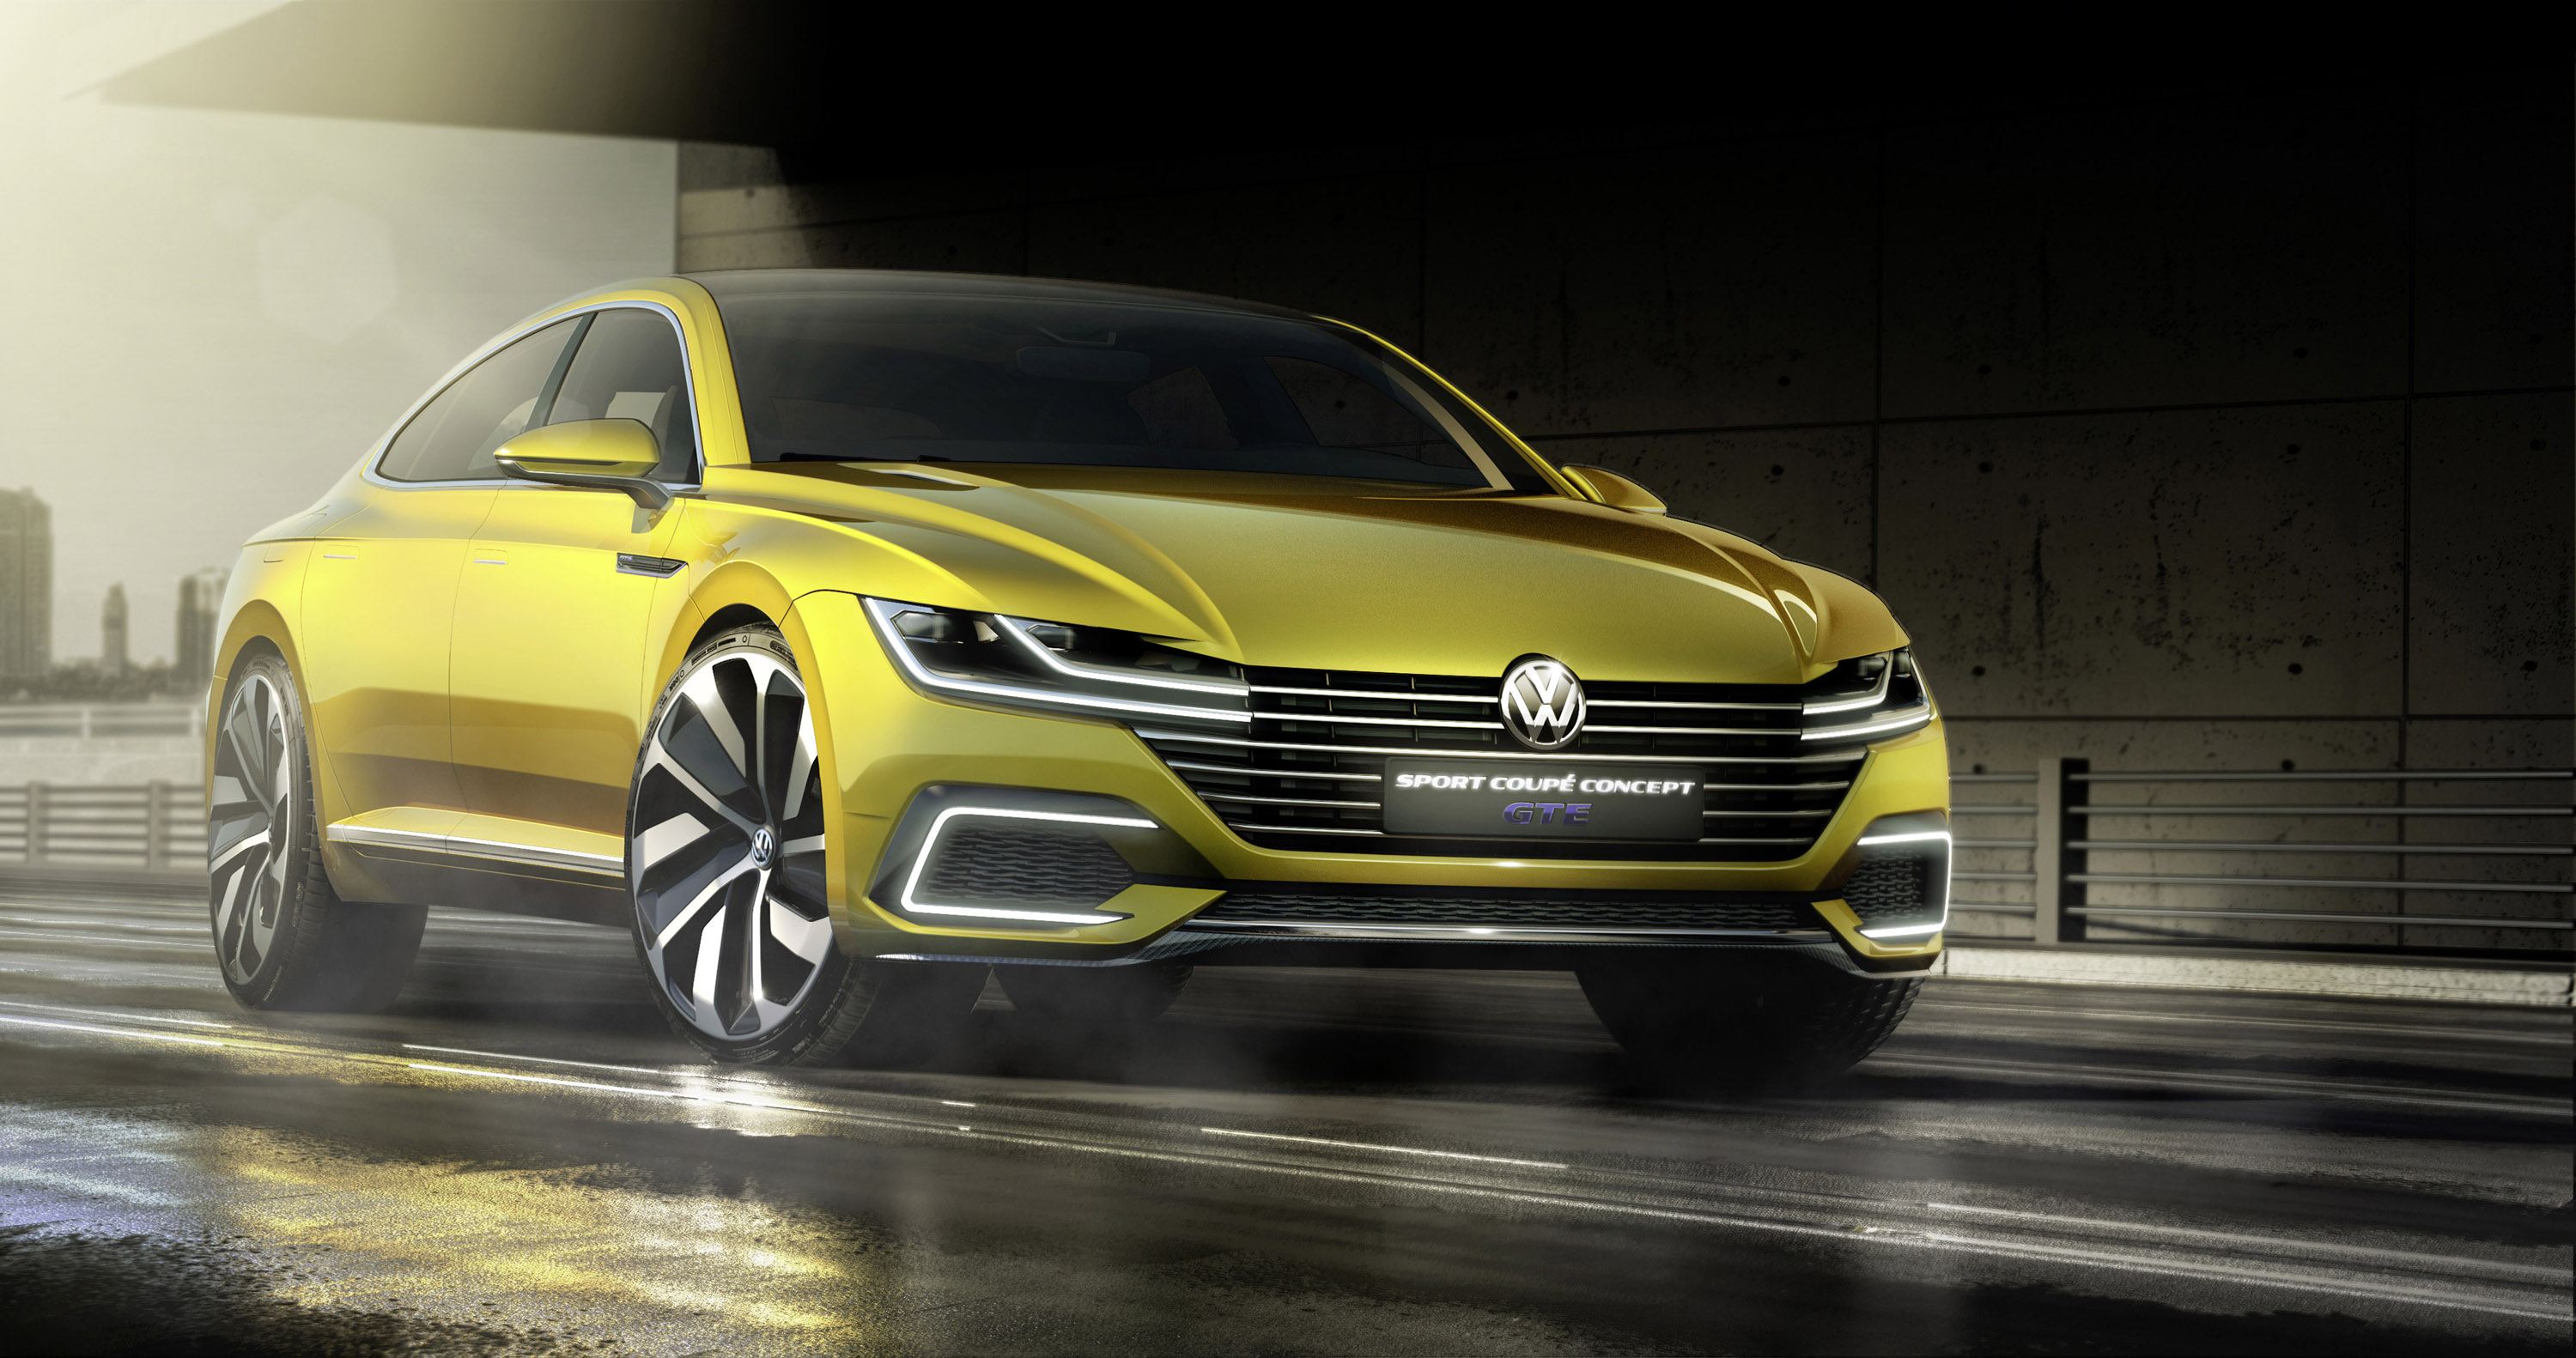 Volkswagen Sport Coupe GTE Concept photo #2